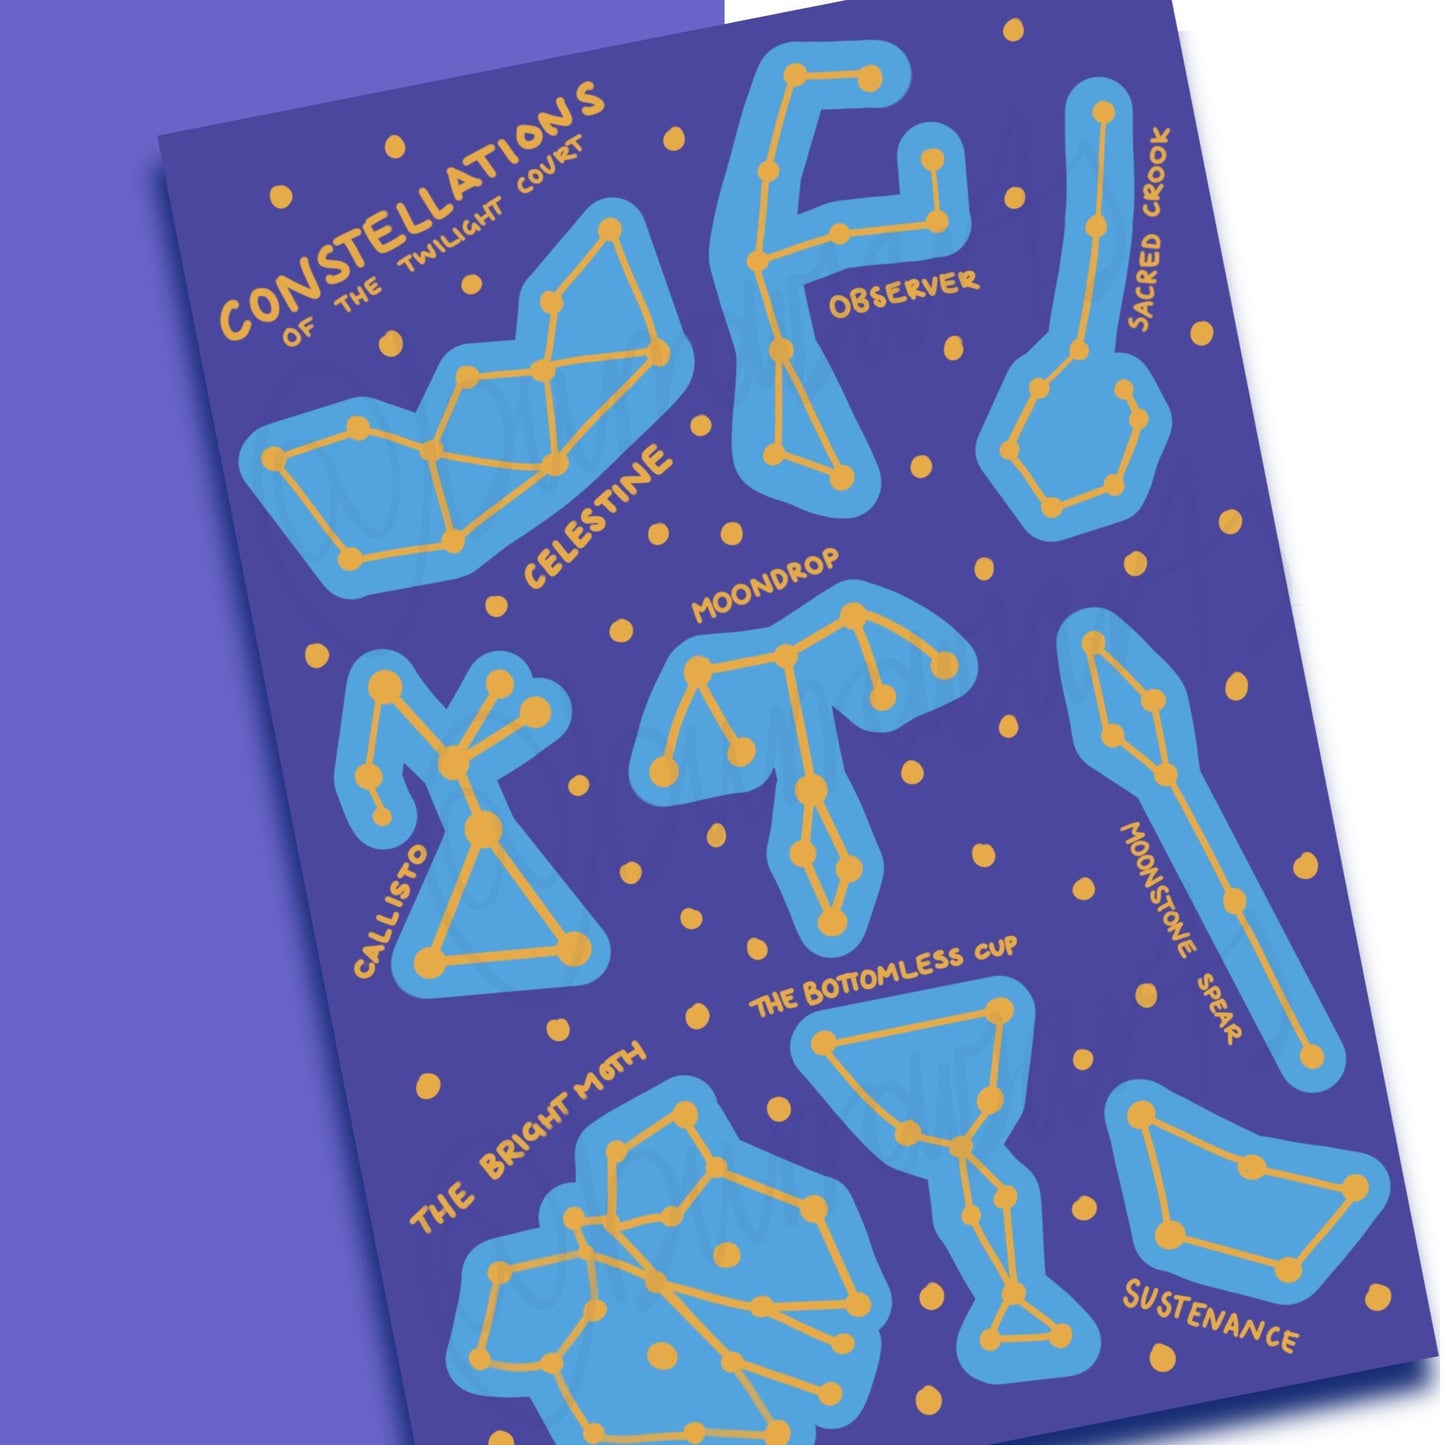 Constellations of the Feywild - Sticker Sheet, Twilight Feywild